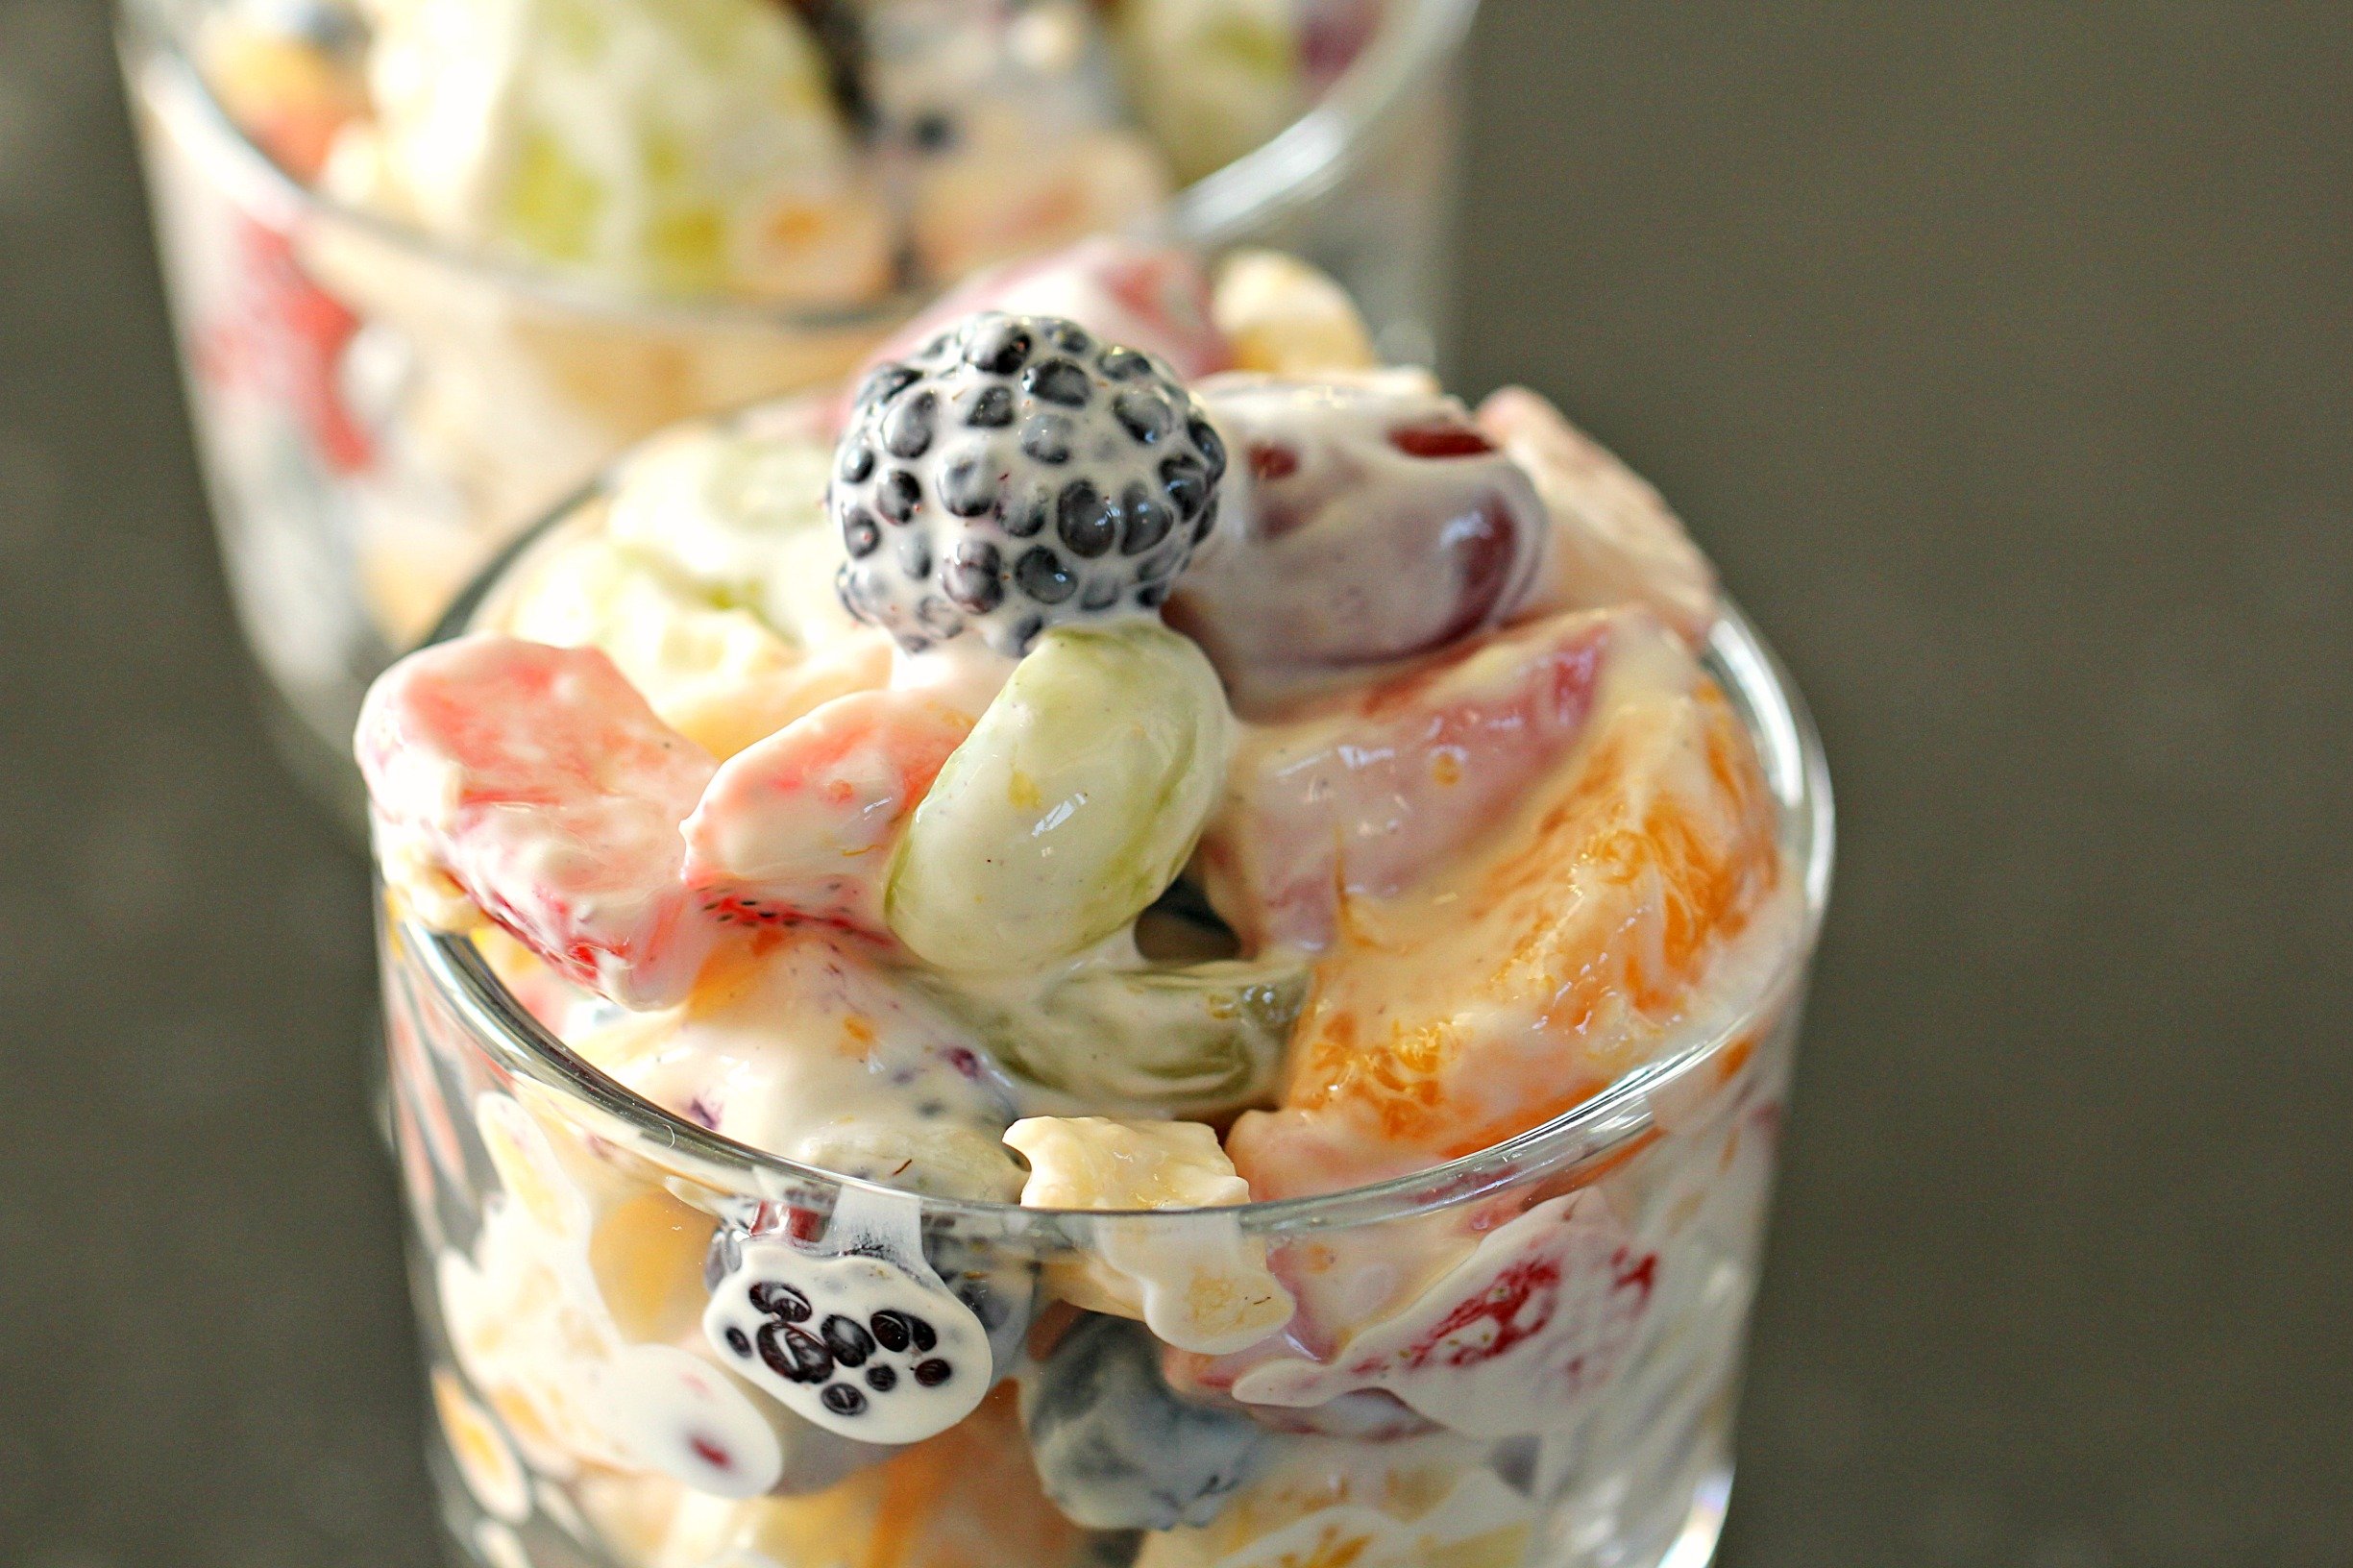 Greek Yogurt Fruit Salad in small cups